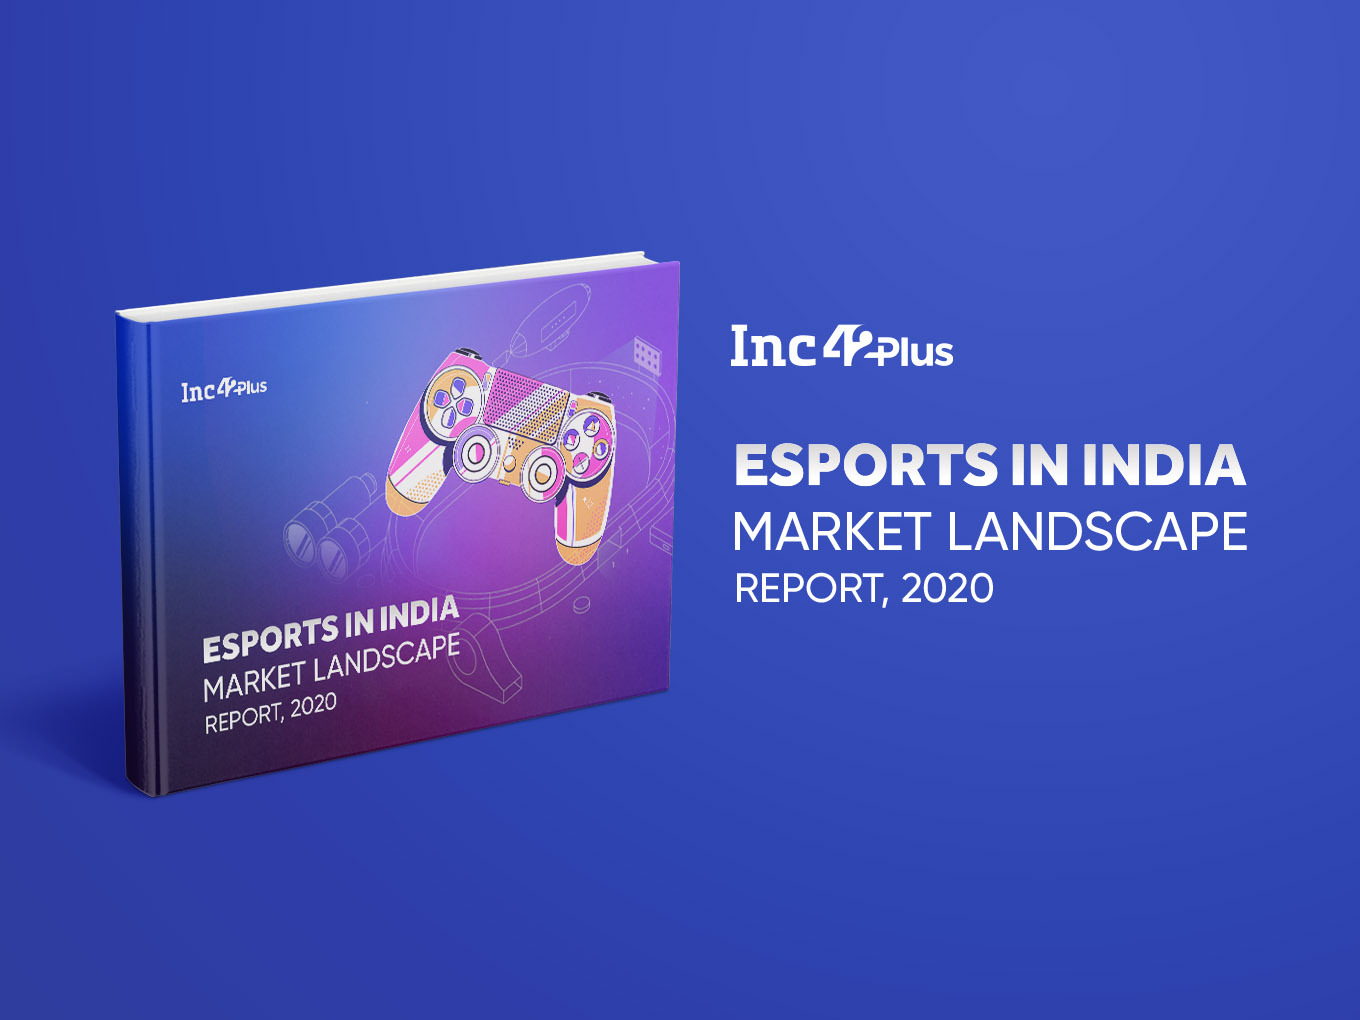 Esports In India: Market Landscape Report 2020